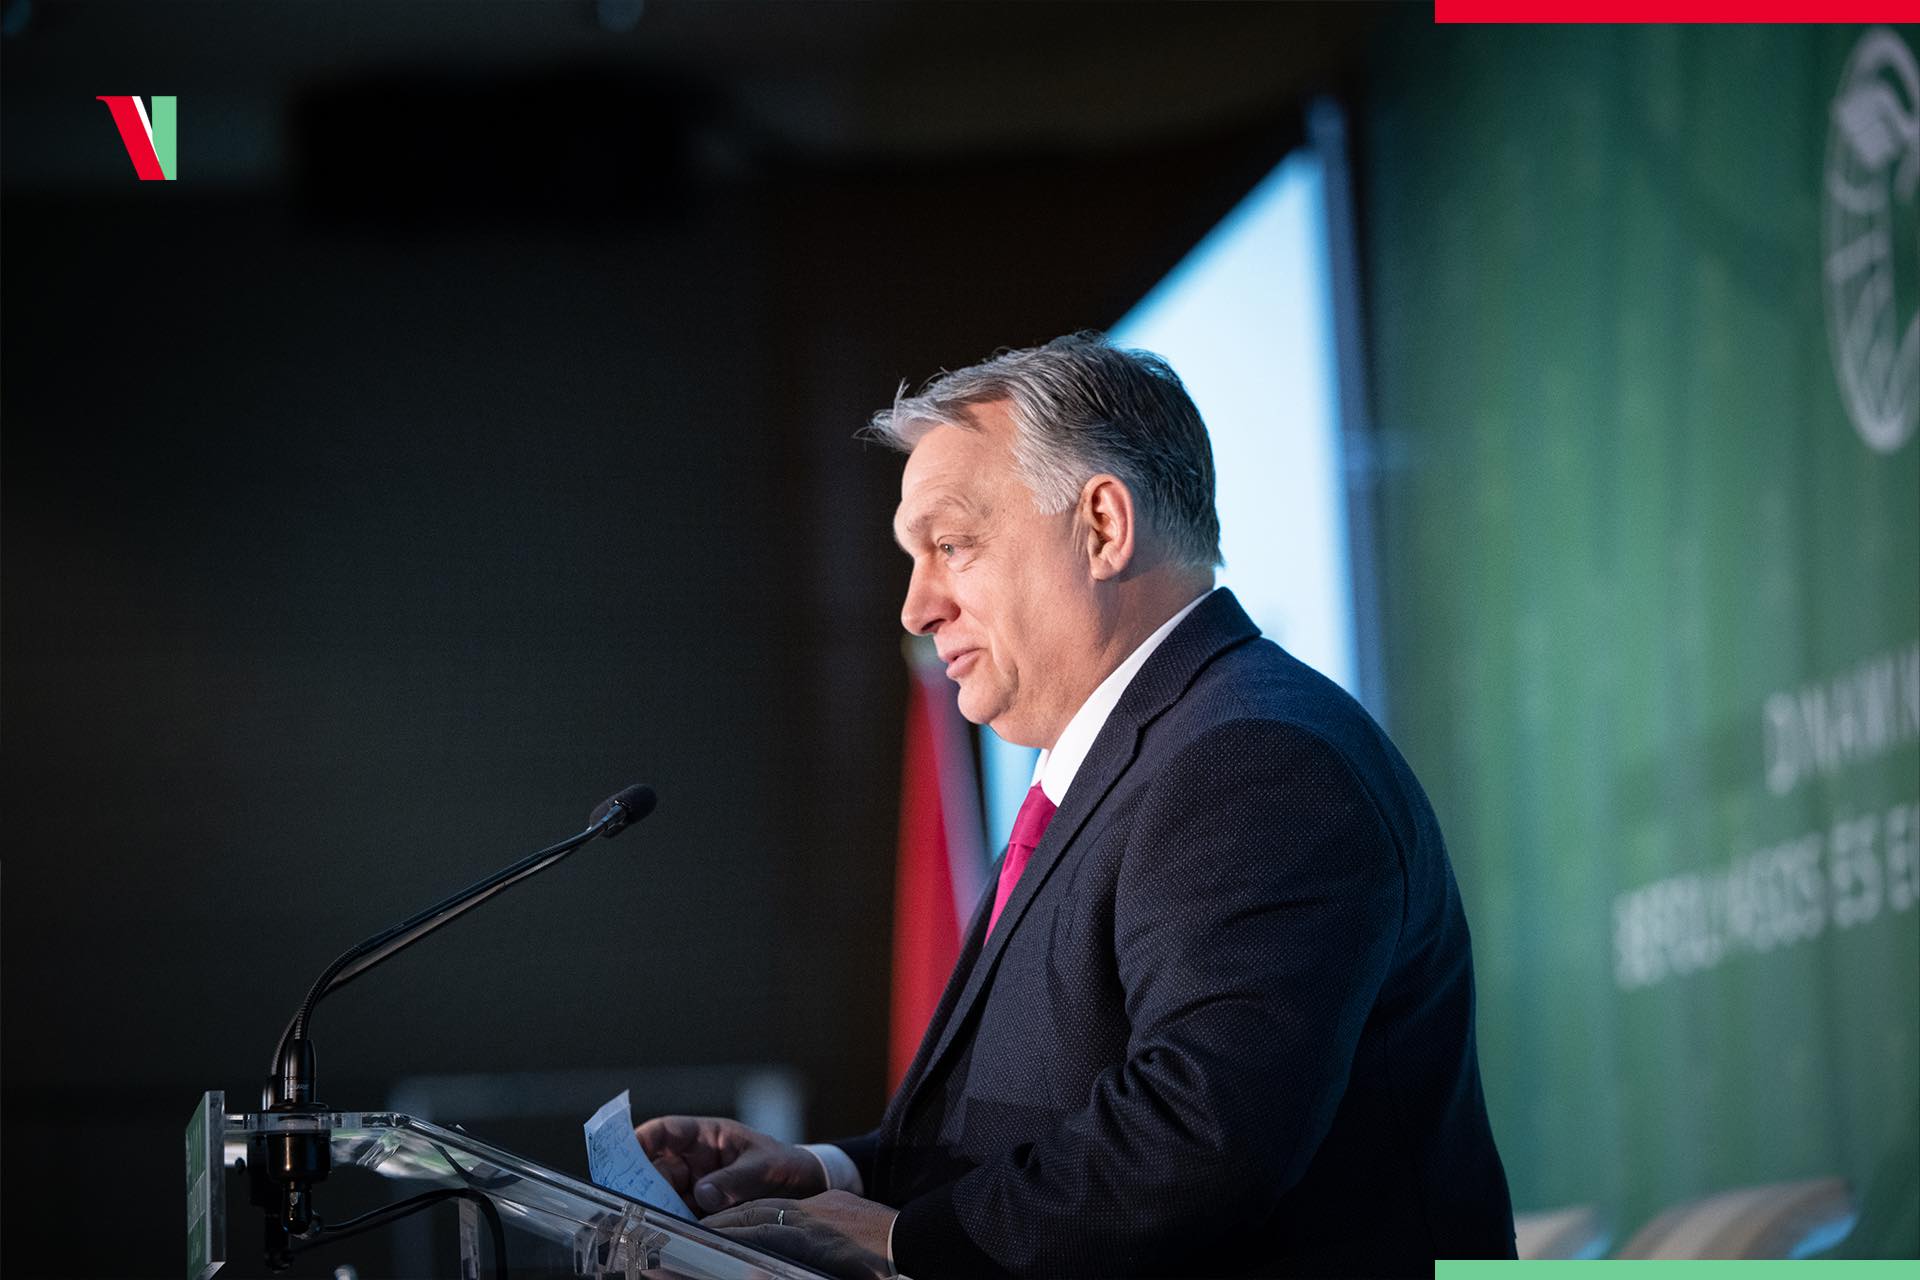 Slovakia is Important Ally & Strategic Partner of Hungary, Says Orbán to New Slovak PM Ódor